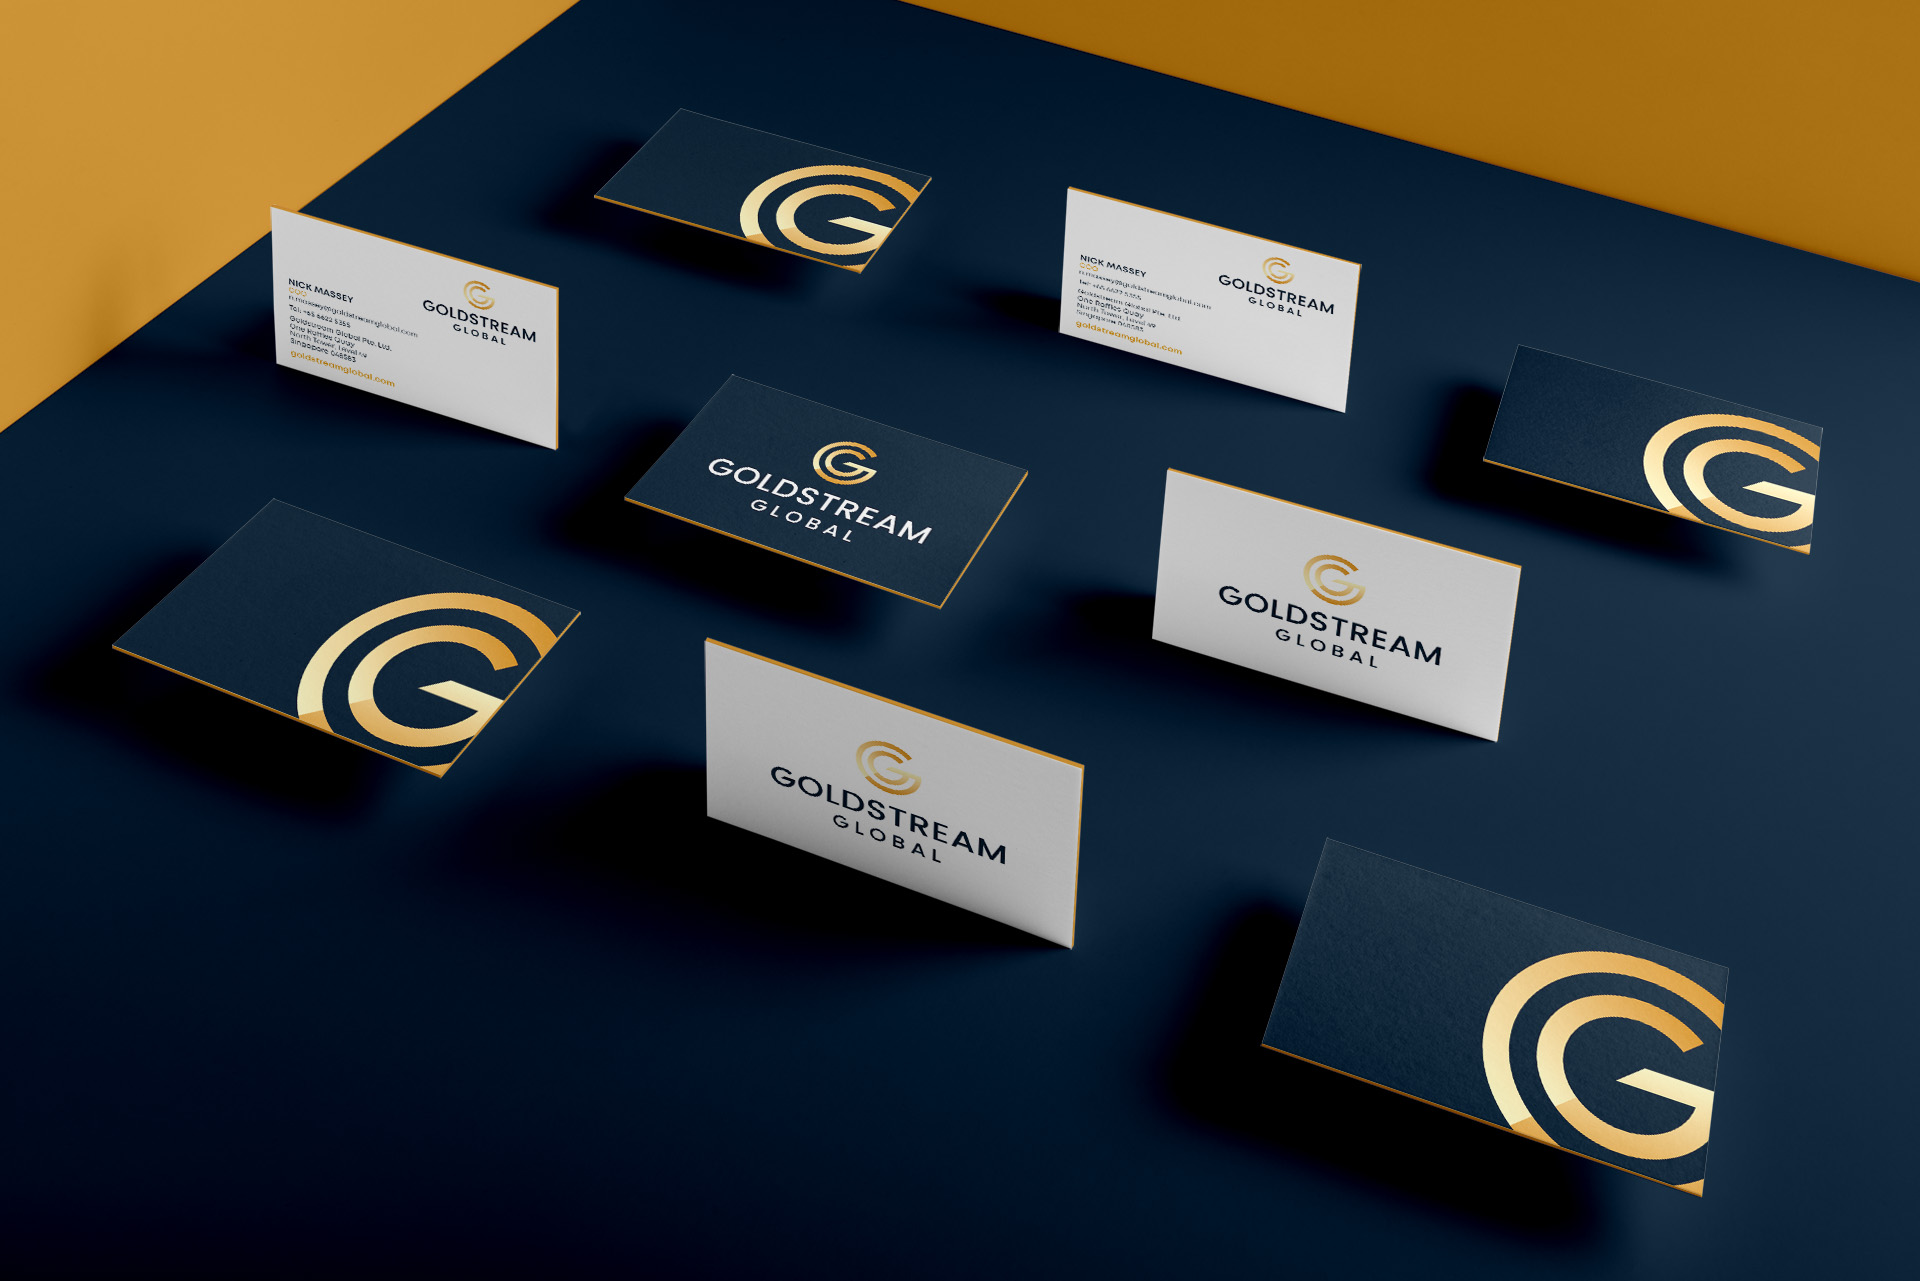 Goldstream Global Business Card printing